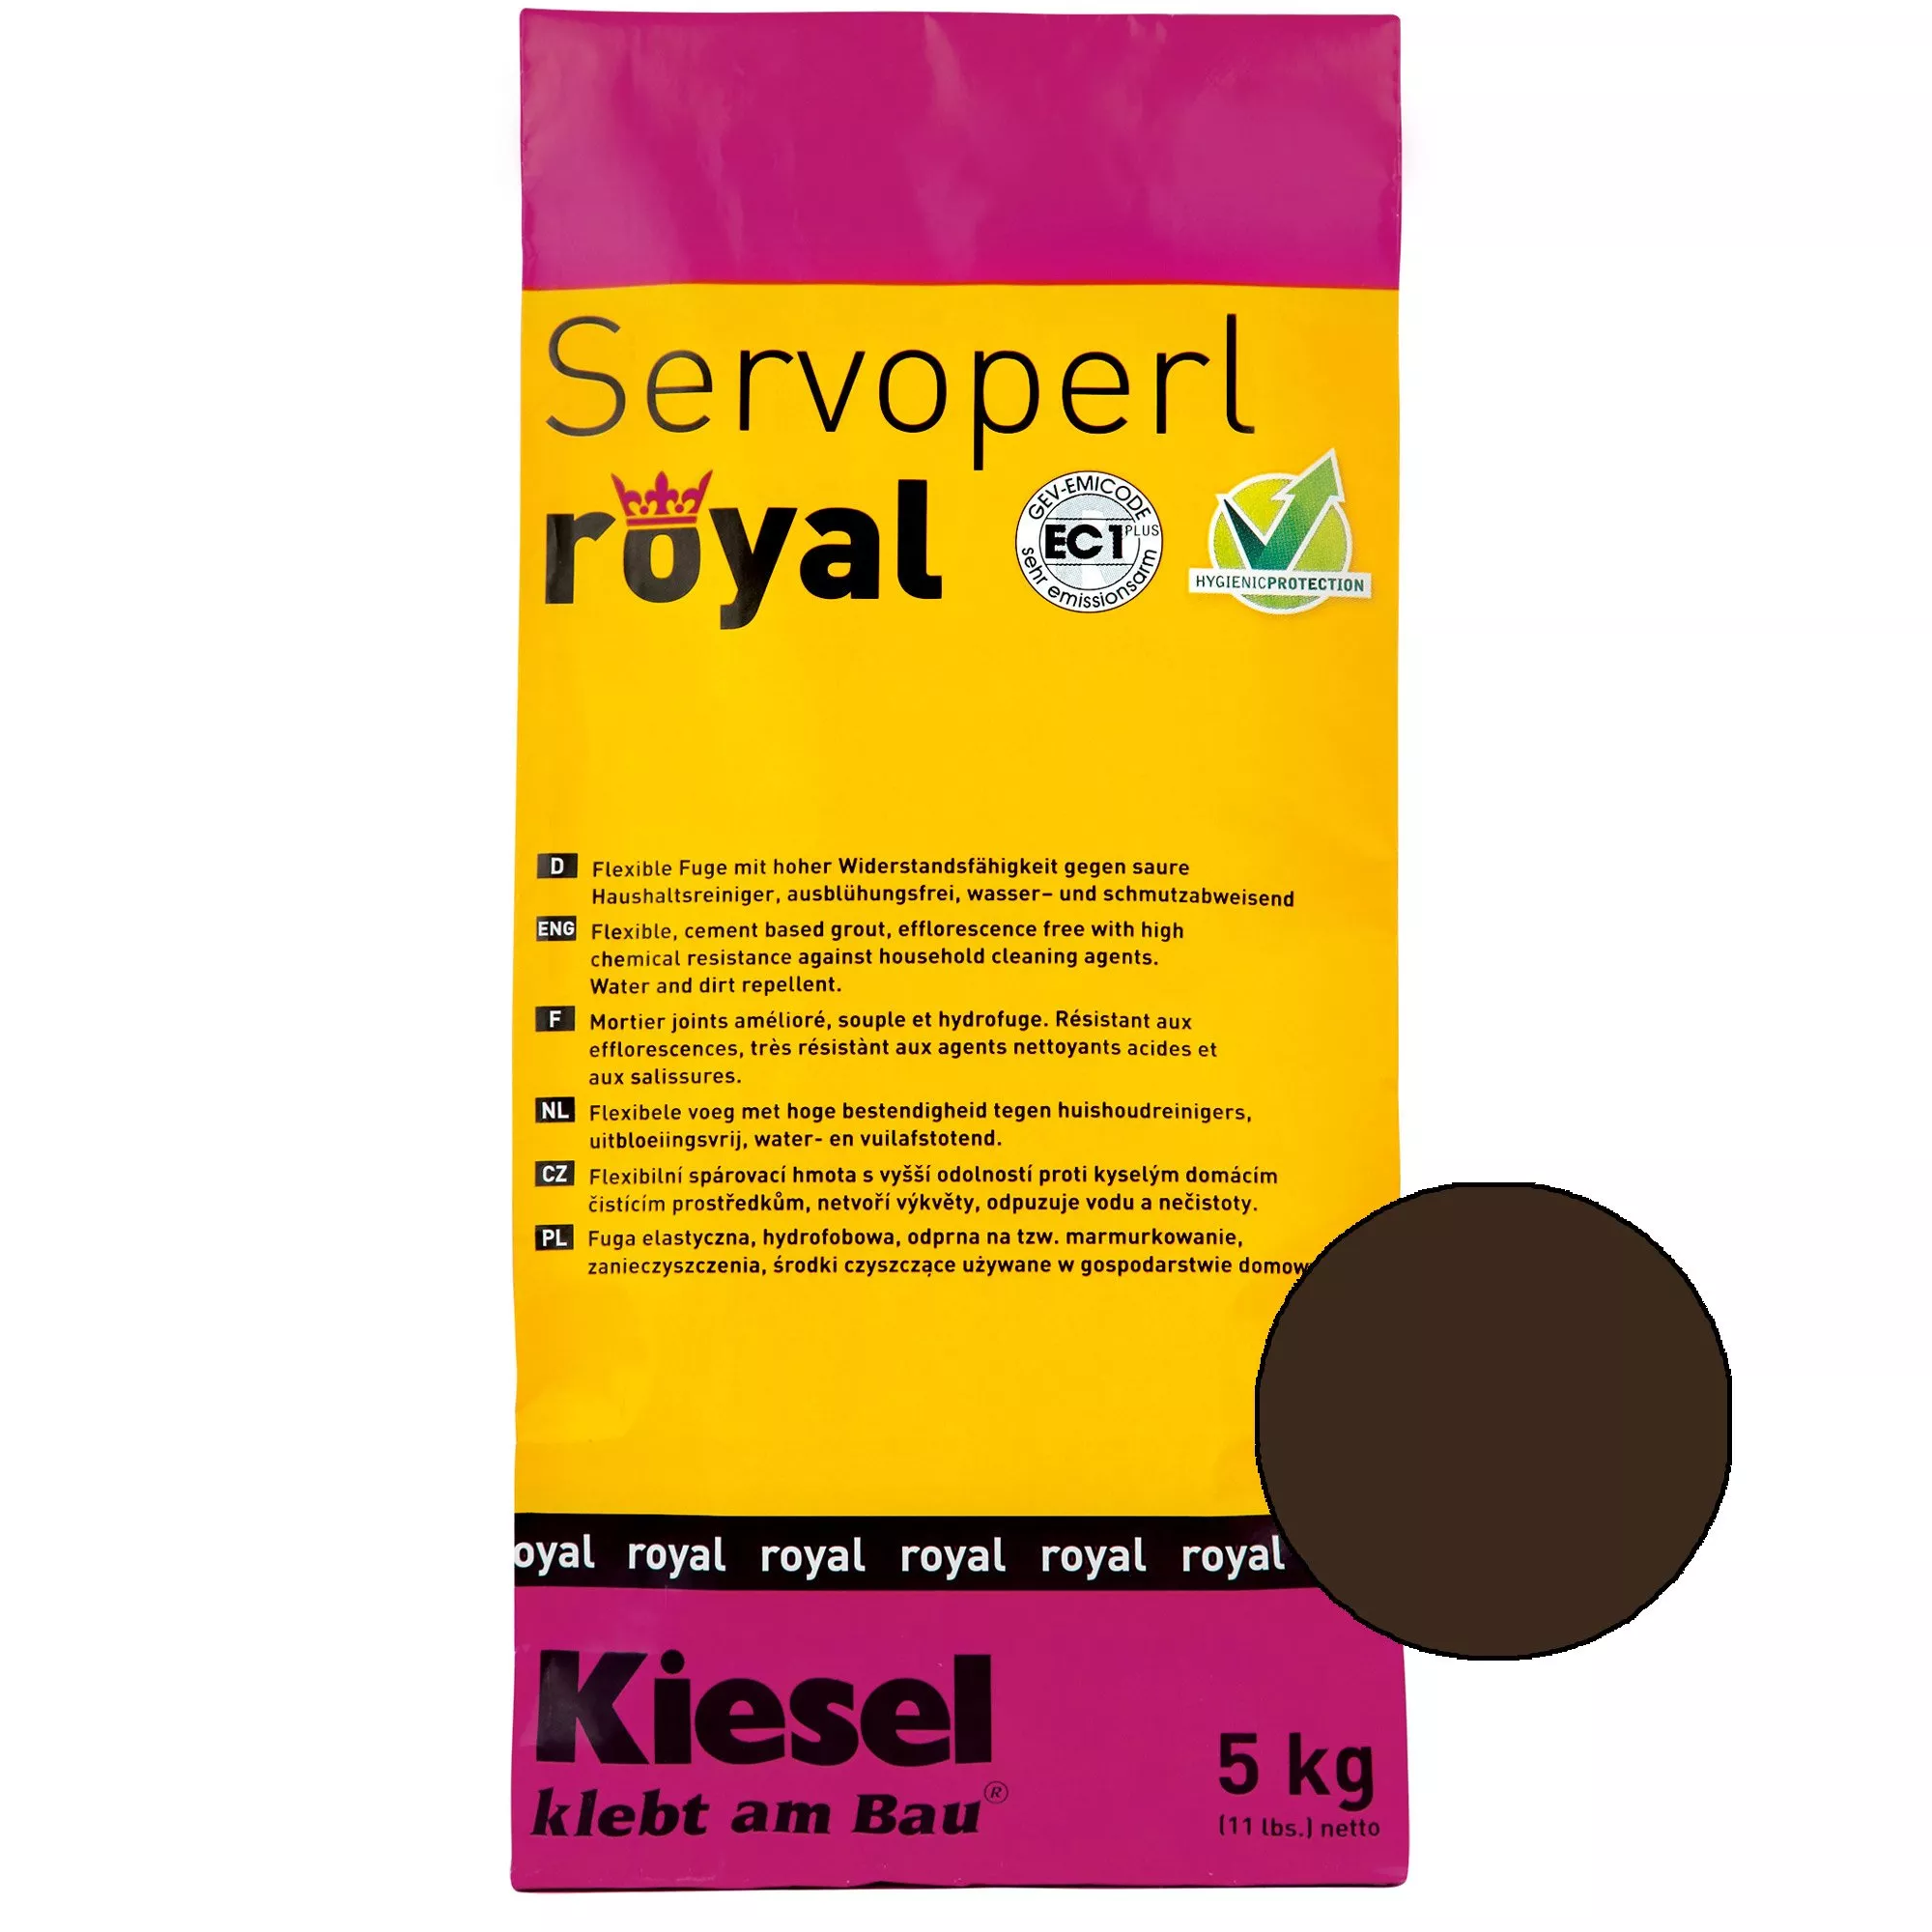 Kiesel Servoperl royal - composto conjunto - 5kg de café